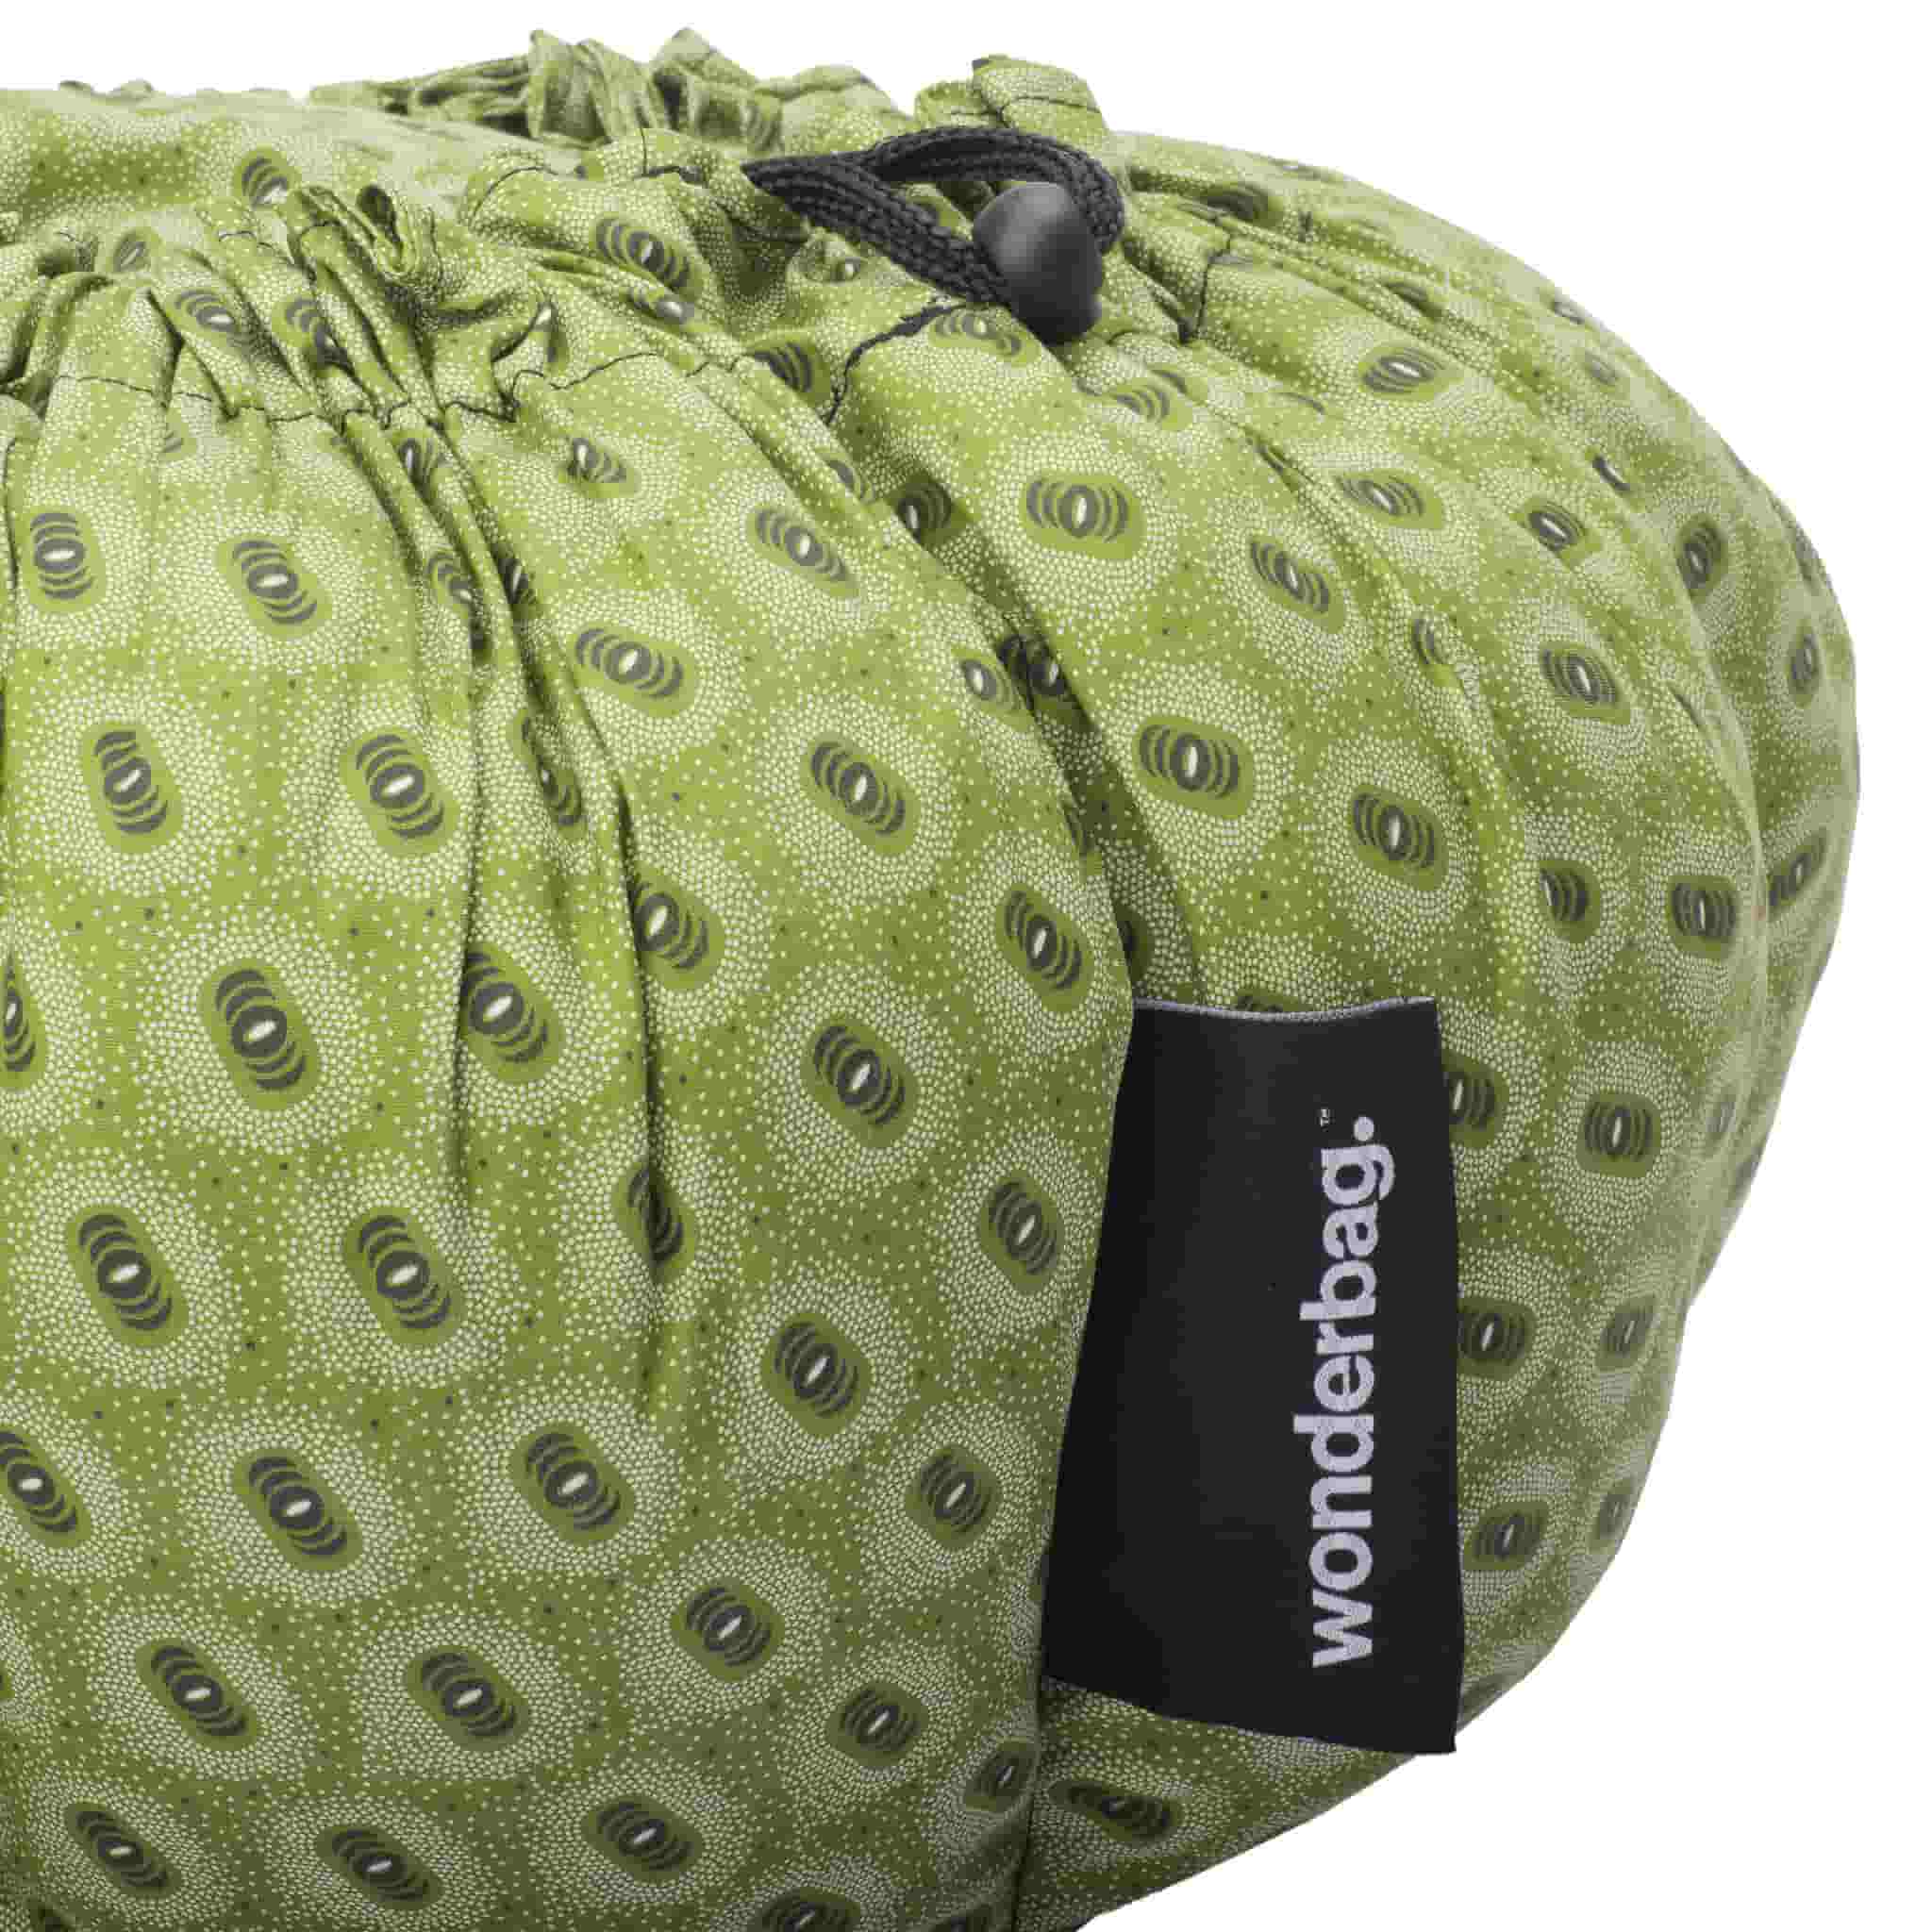 The Wonderbag Slow Cooker Bag: Should I Buy One? – Sous Chef UK